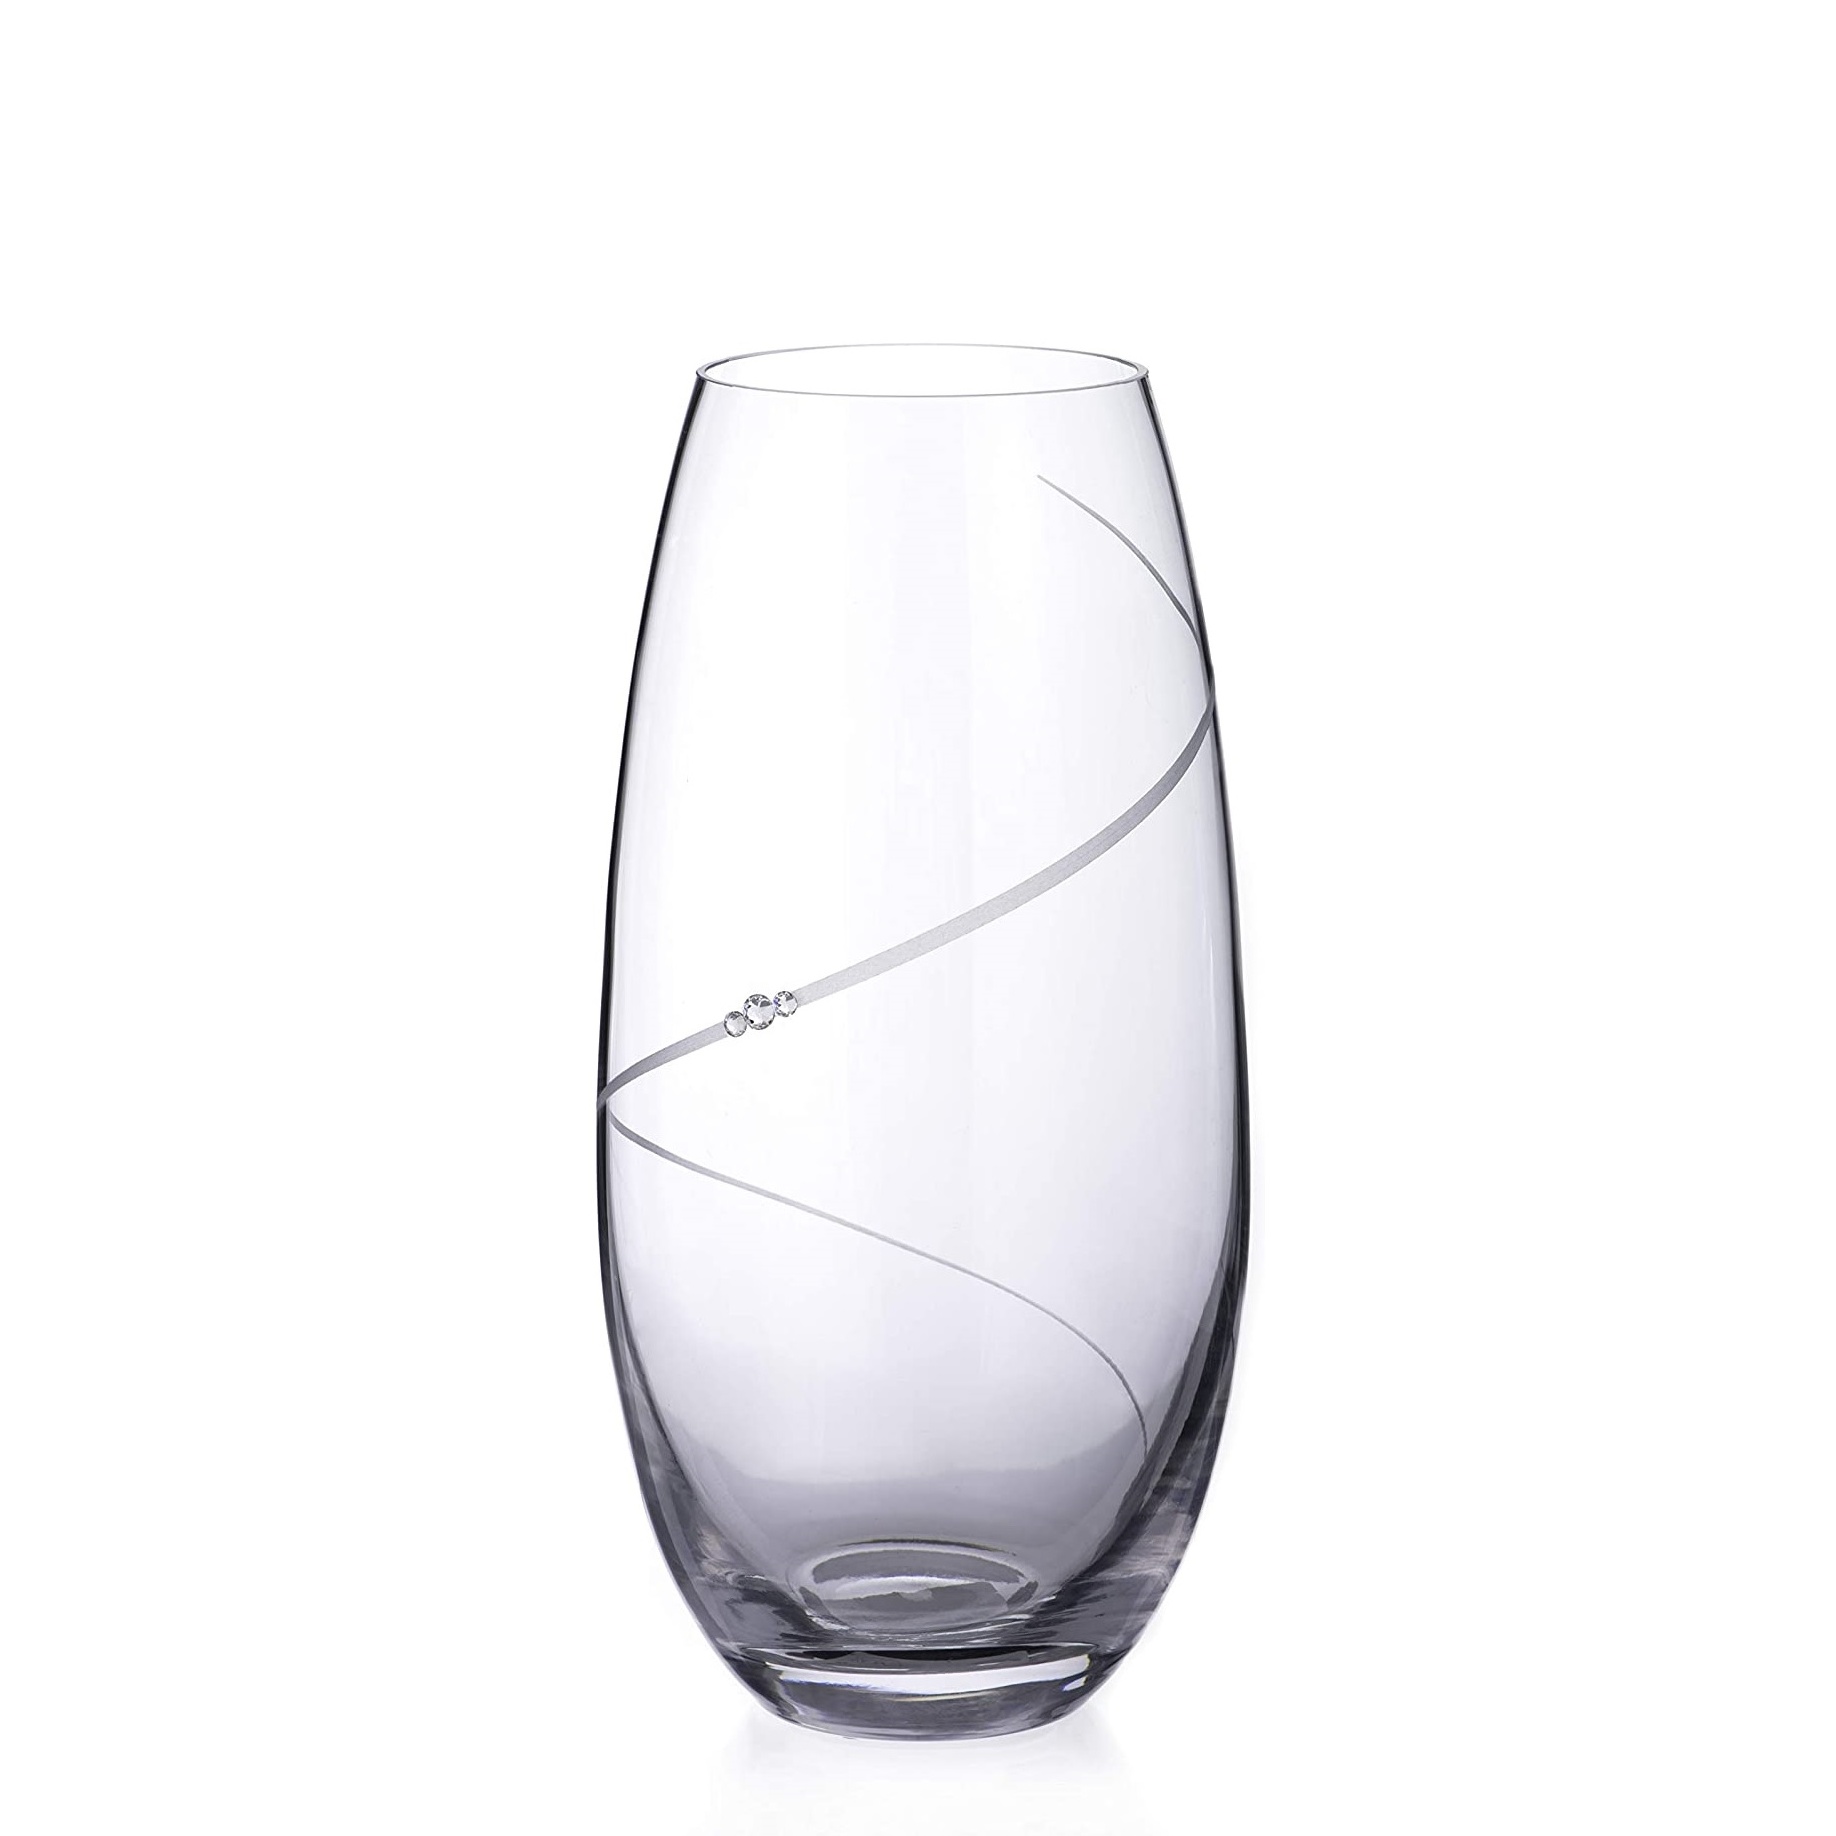 Diamante skleněná váza Silhouette City Barel se Swarovski krystaly 25 cm